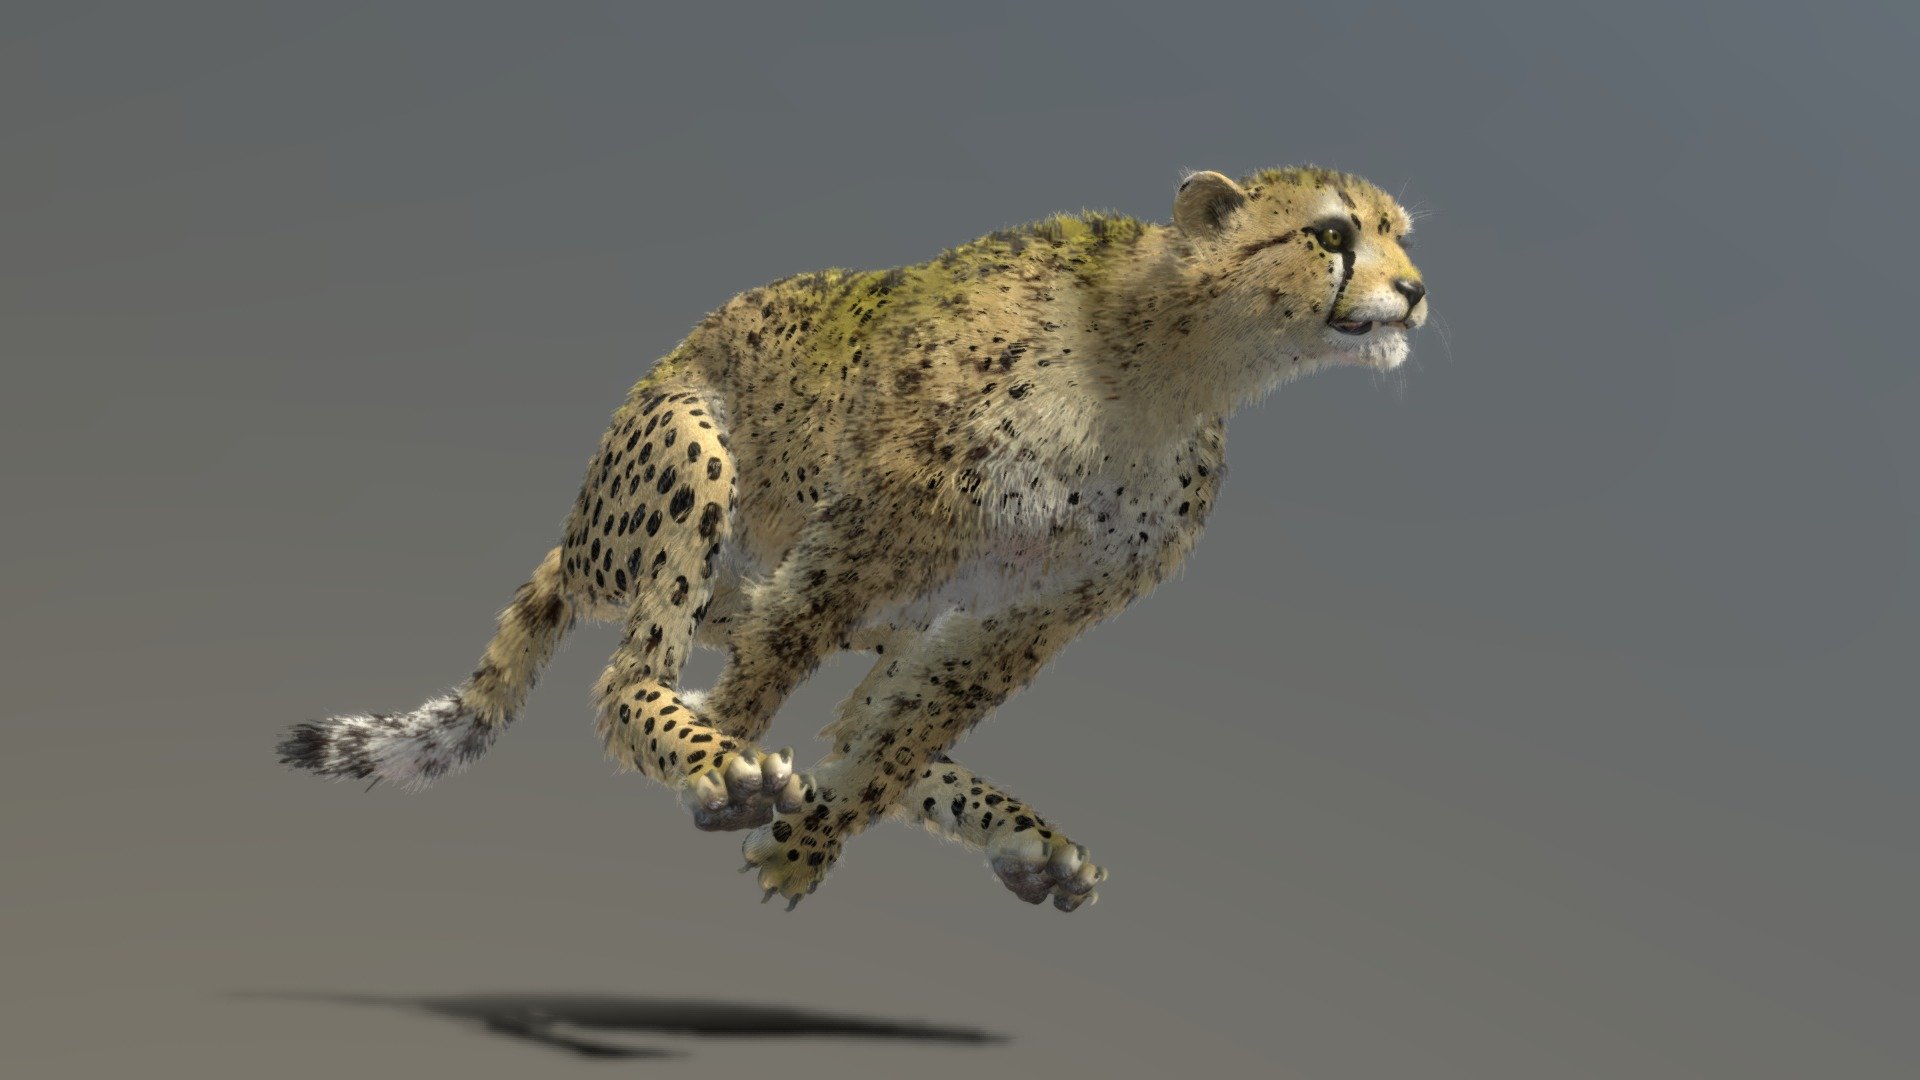 3D model Running Cheetah Sculpture VR / AR / low-poly